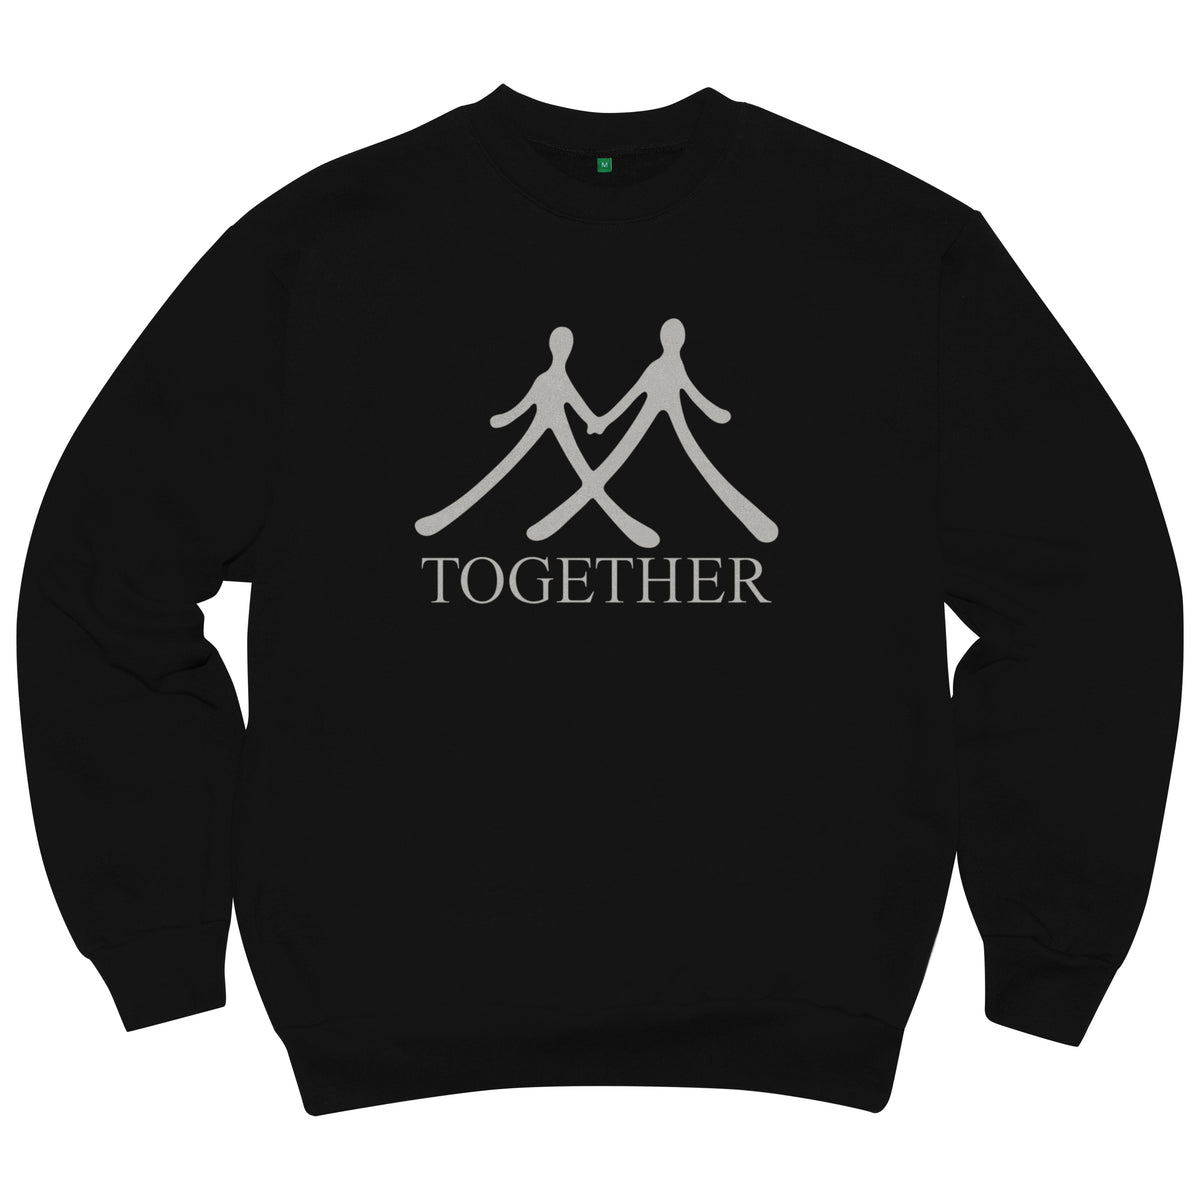 Together Crewneck Sweatshirt (Black)